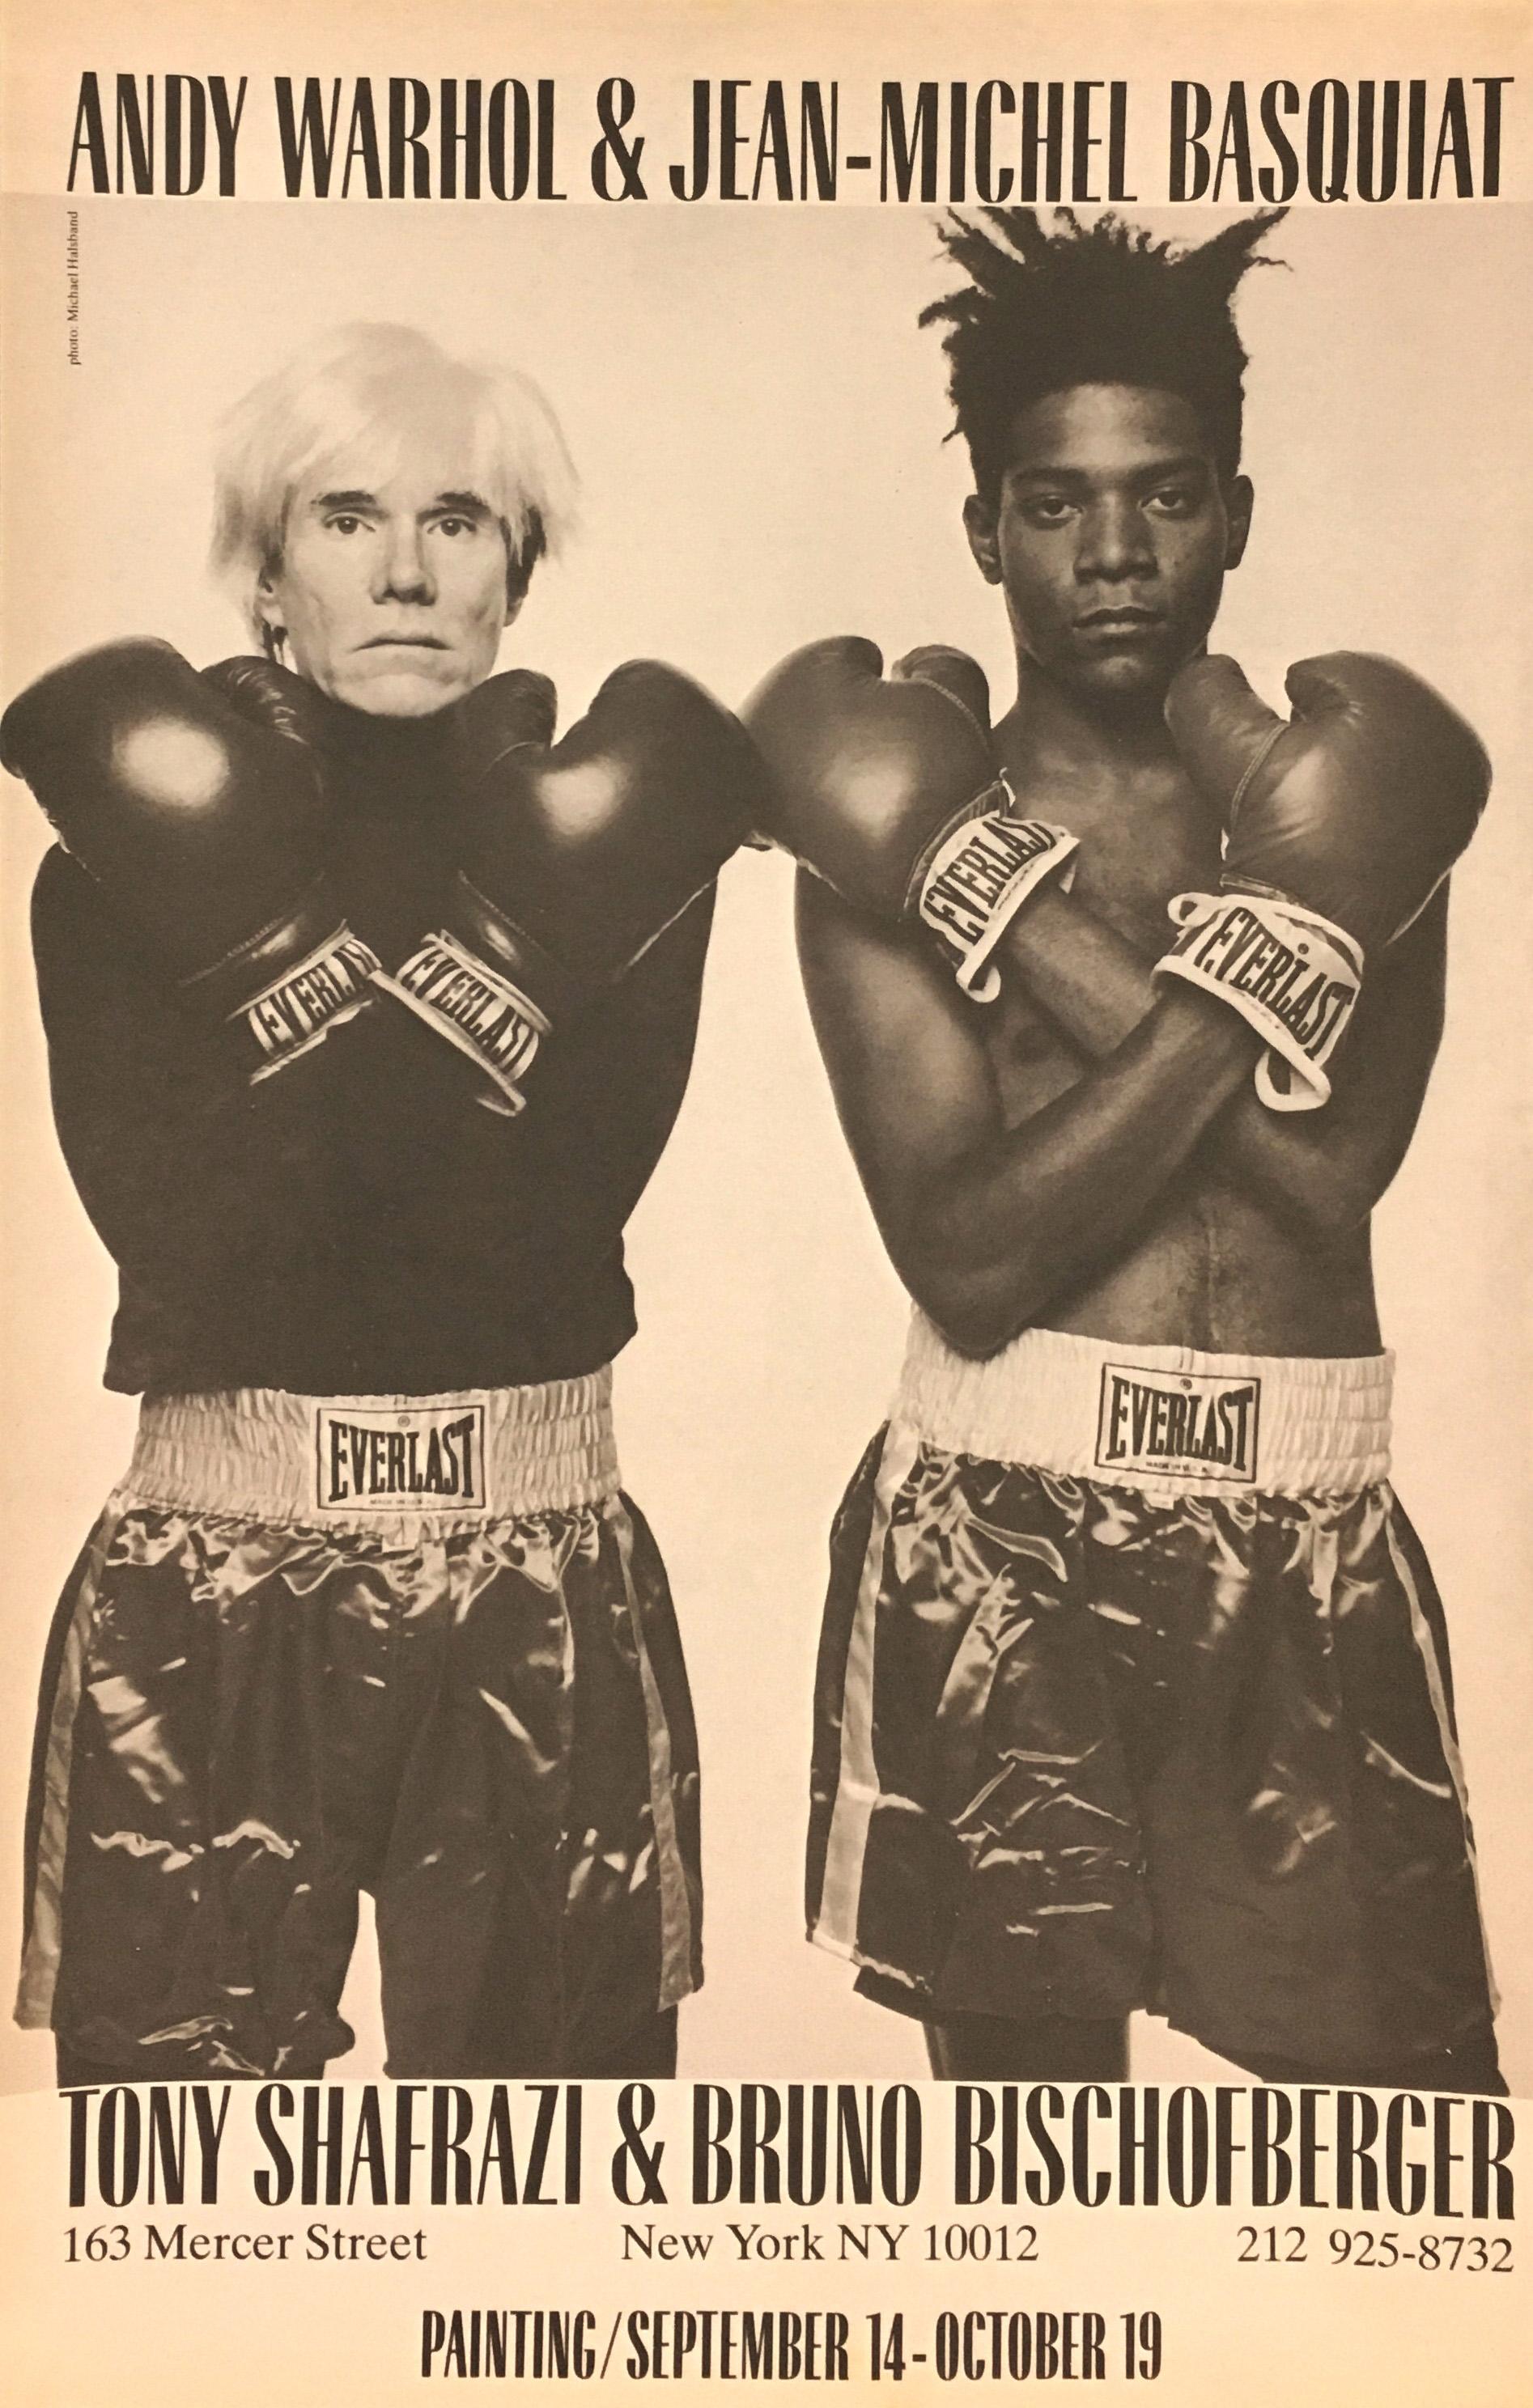 Warhol Basquiat Boxing advertisement 1985 (Warhol Basquiat boxing 1985)  - Pop Art Photograph by Michael Halsband